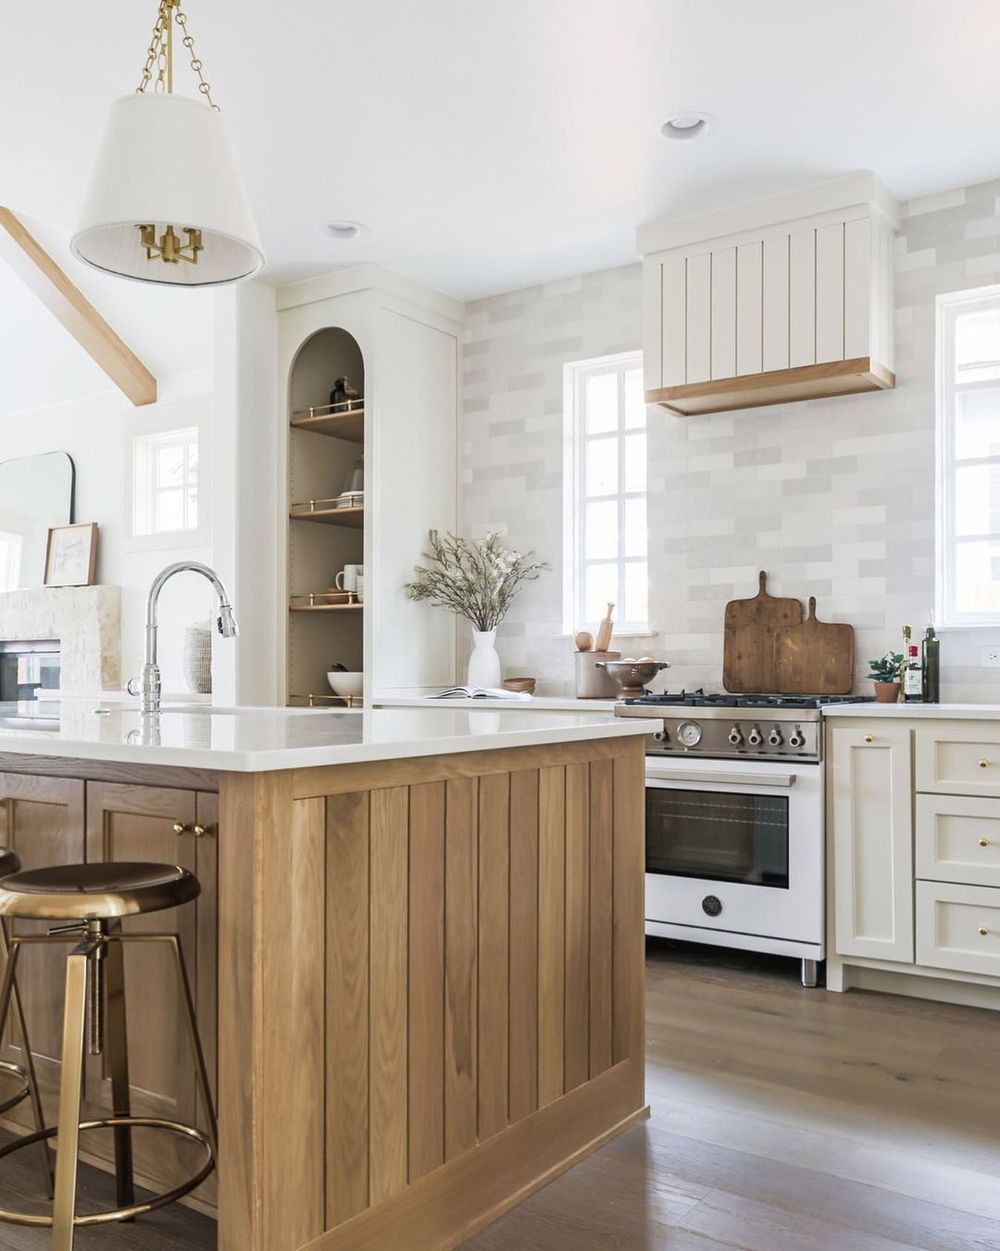 Neutral Kitchen Decor with Brass Bar Stools and Wood Paneled Kitchen Island via @kelseyleighdesignco